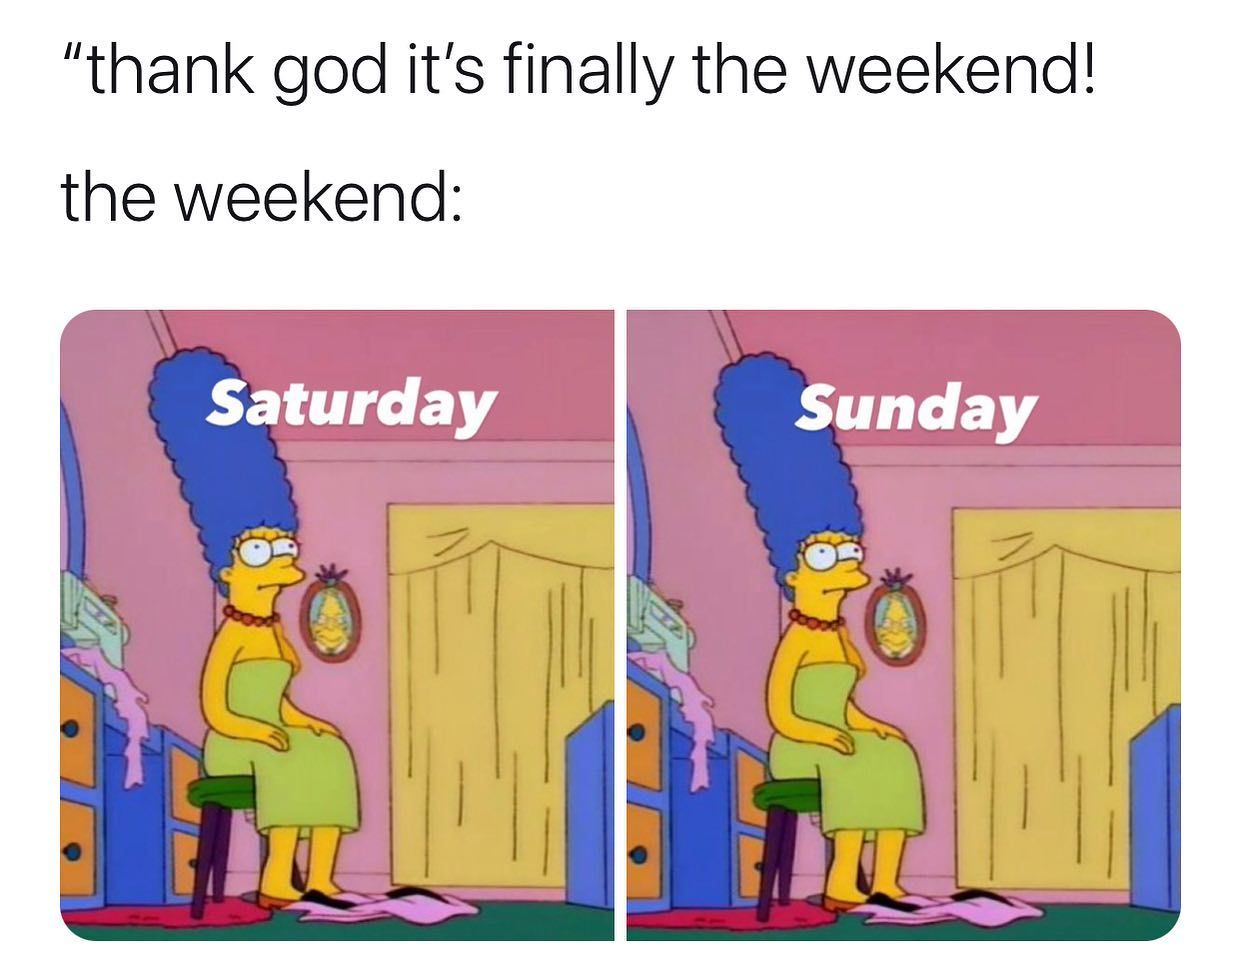 Weekends don't feel like weekends anymore